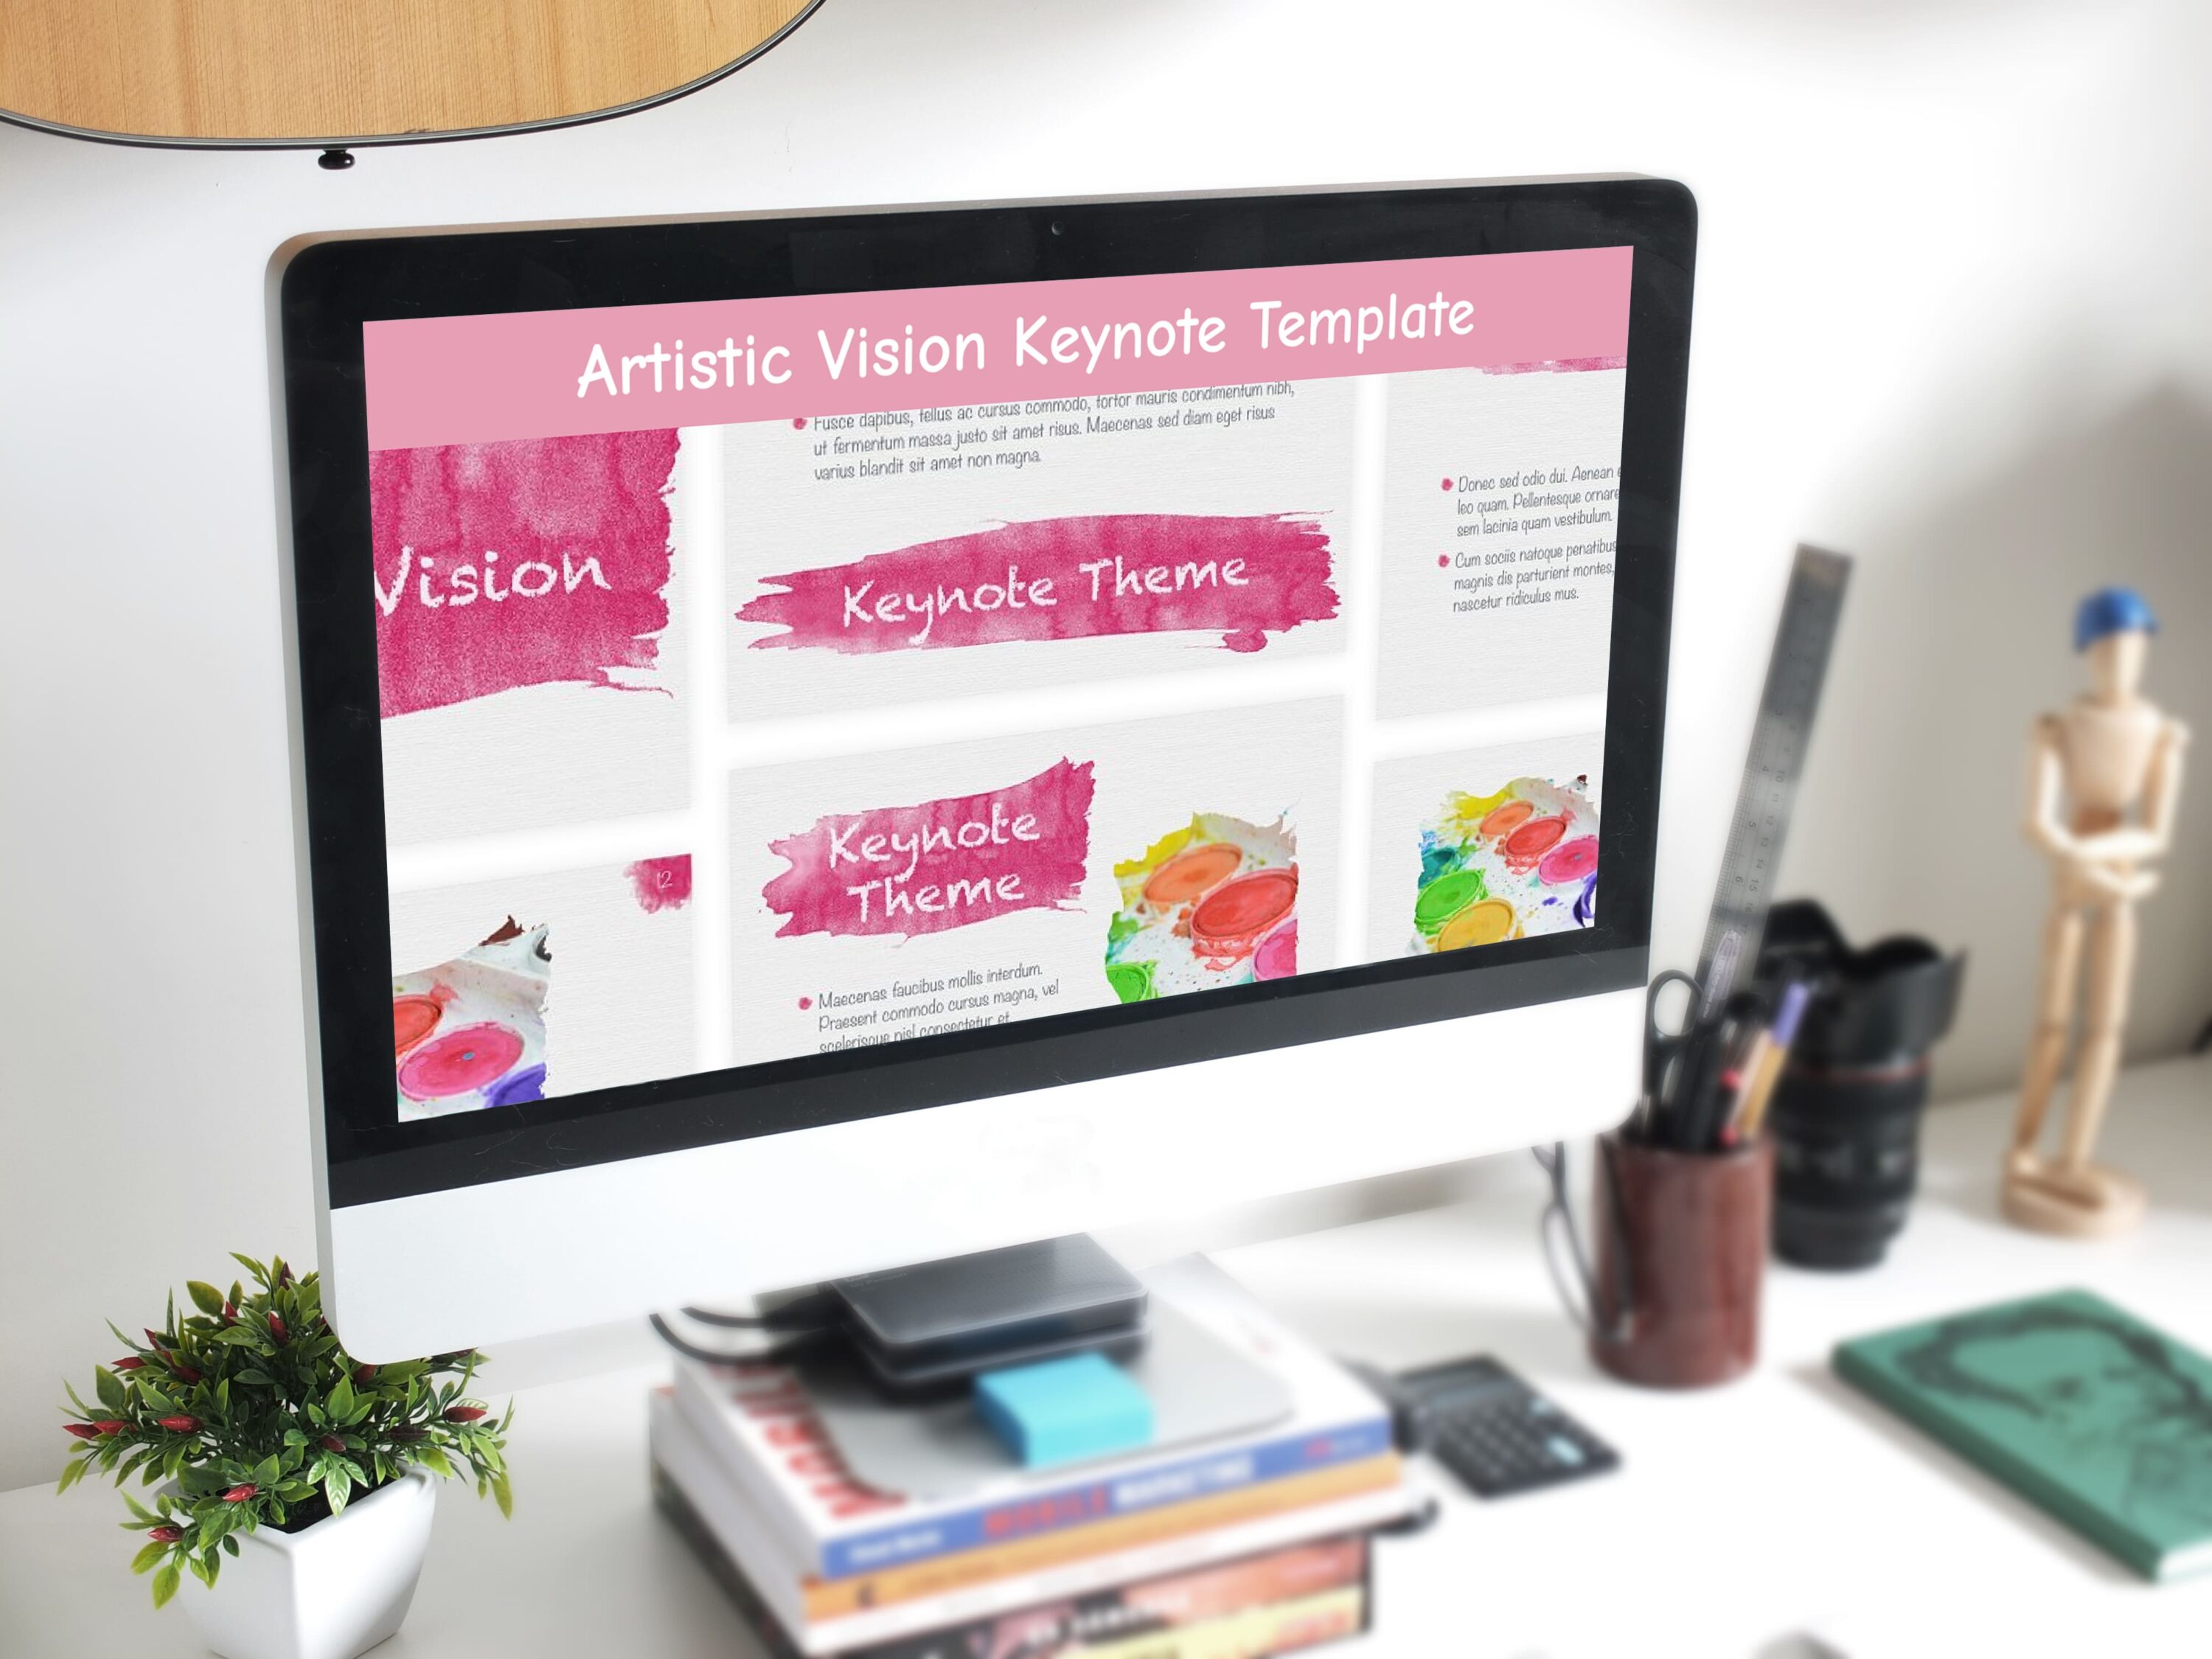 Artistic Vision Keynote Template - desktop.